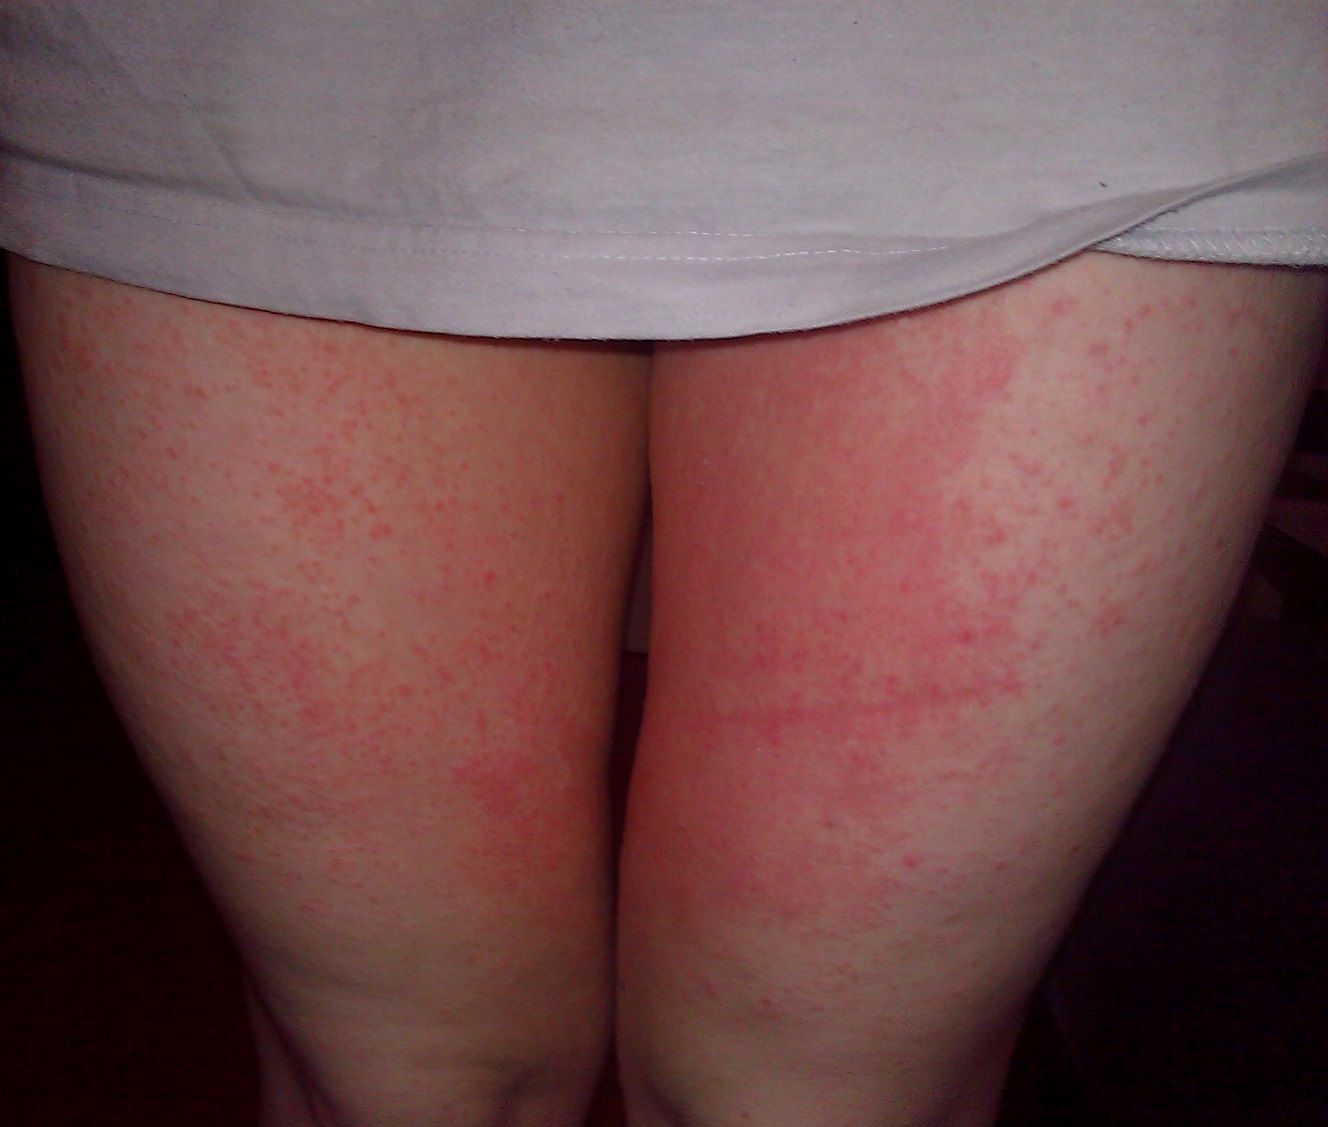 heat rash legs